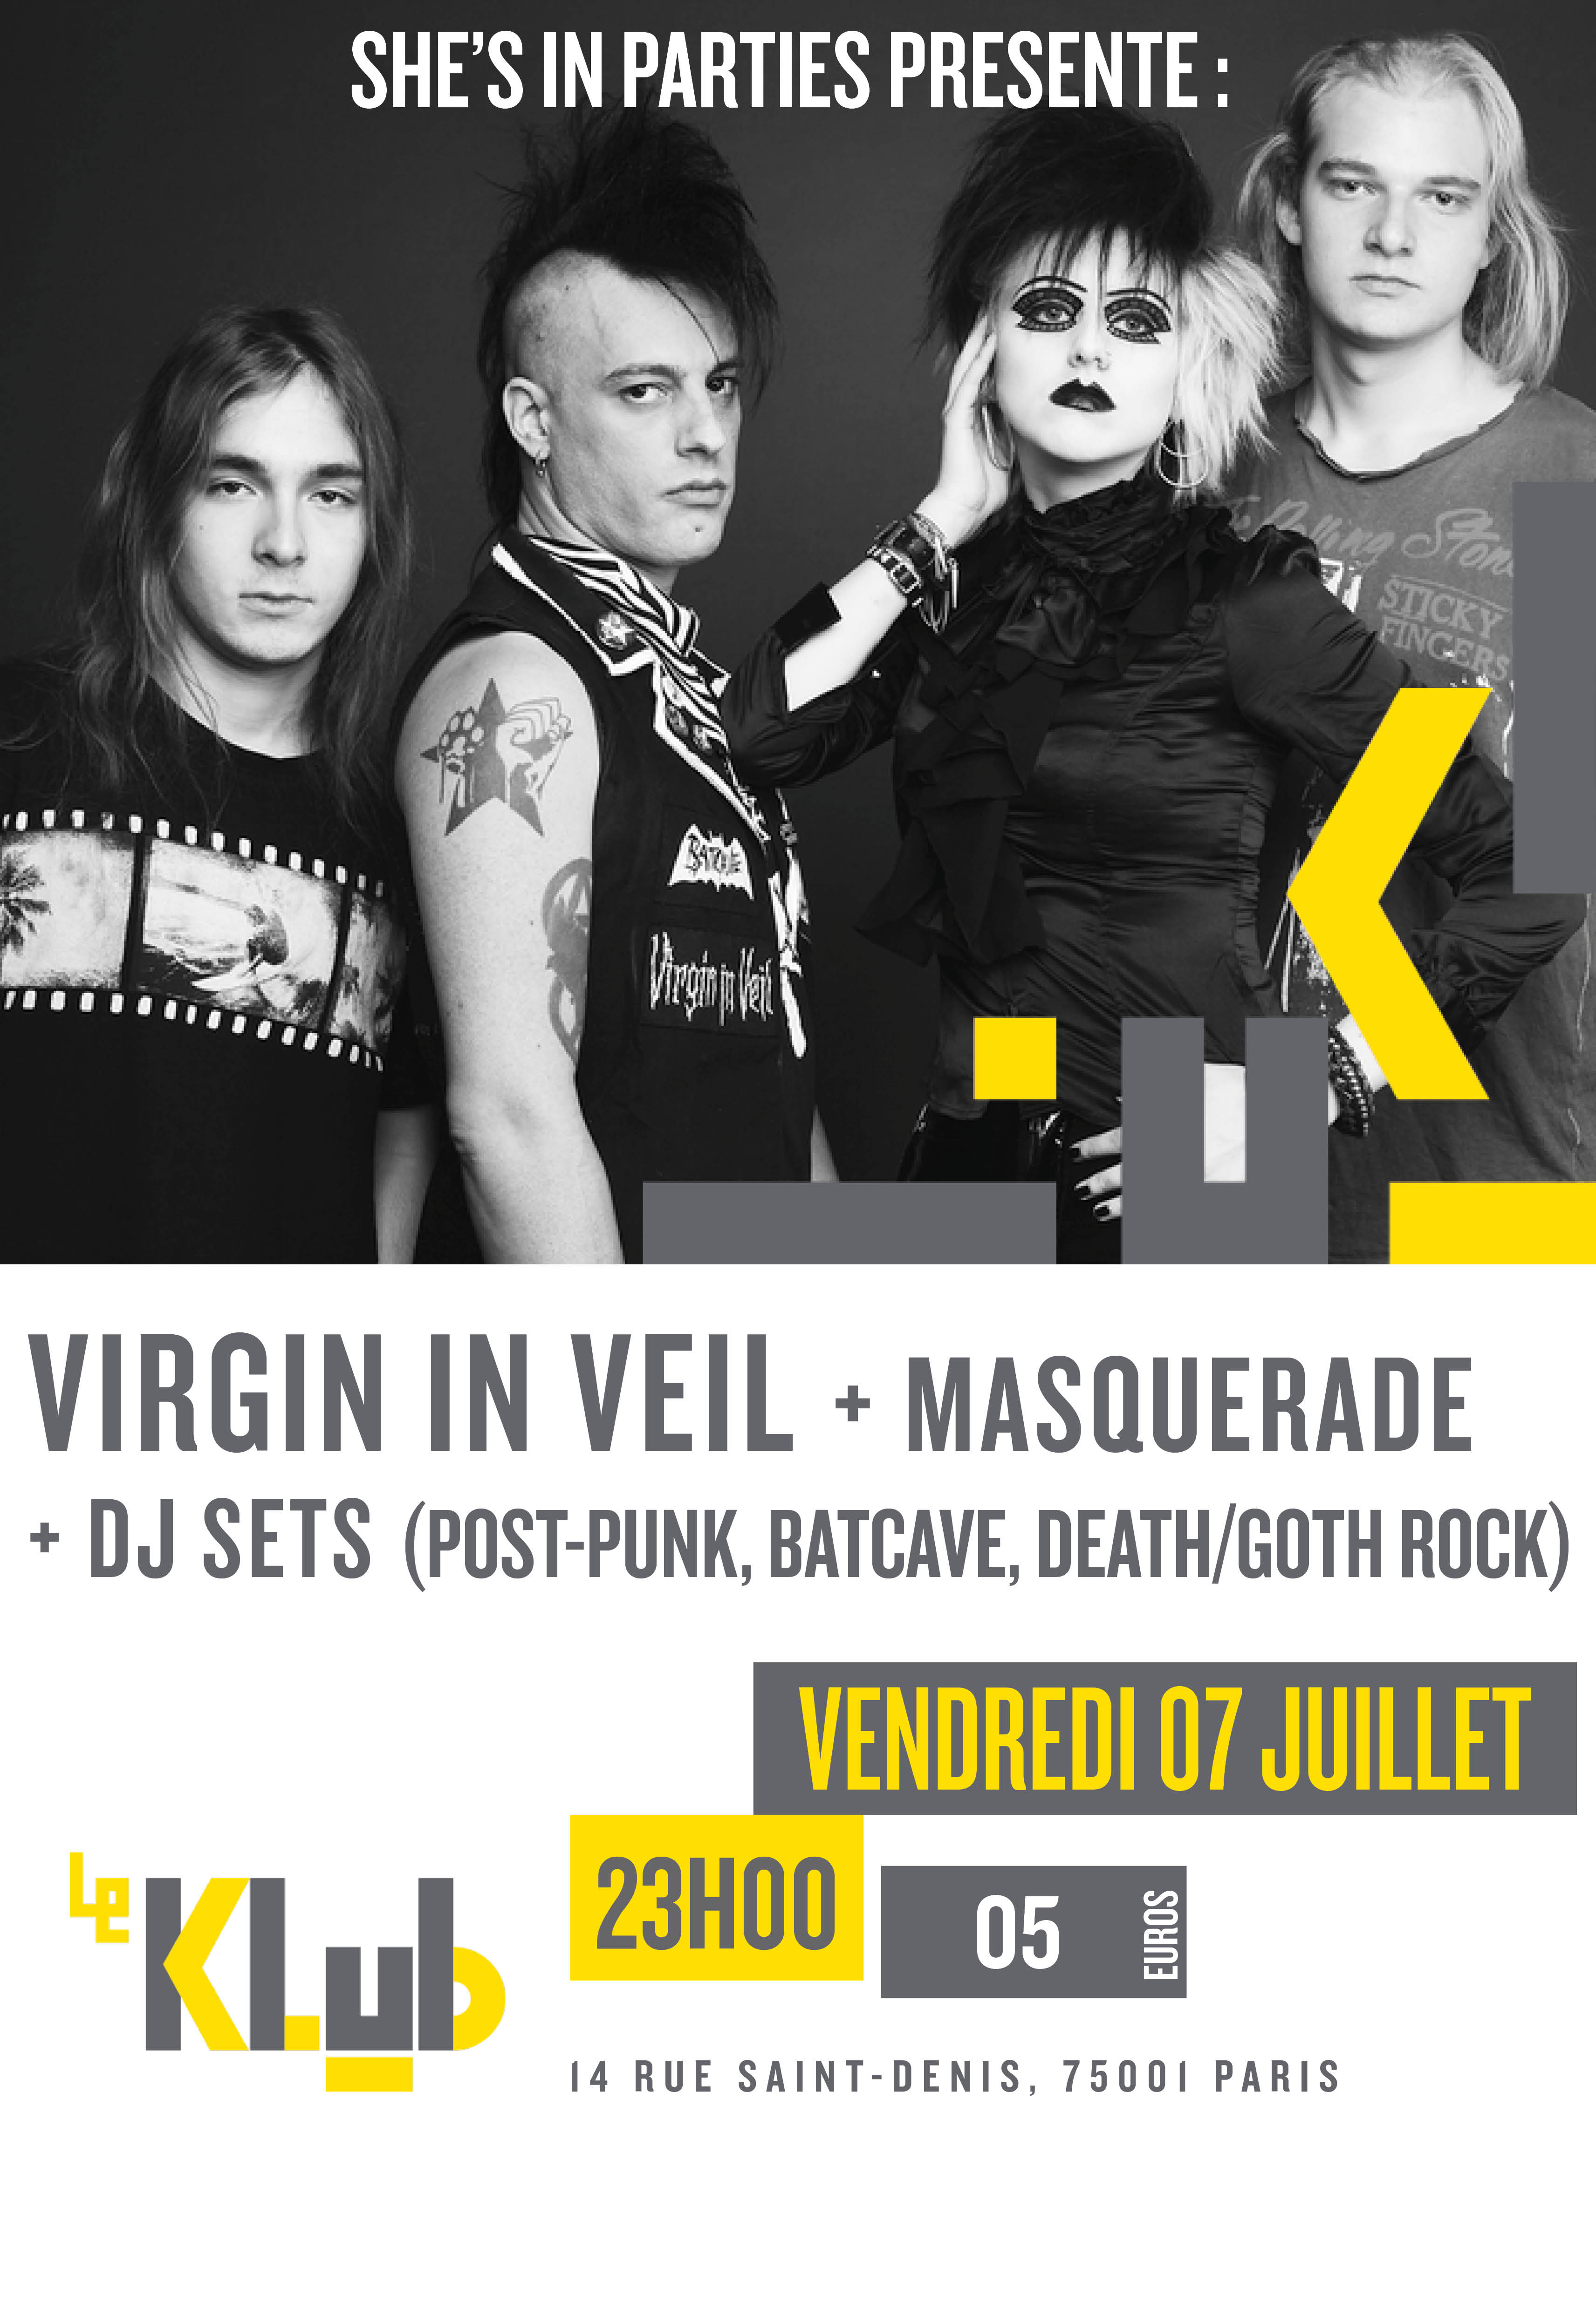 She's in Parties : Virgin in Veil + Masquerade + DJ SETS ■ 07.07